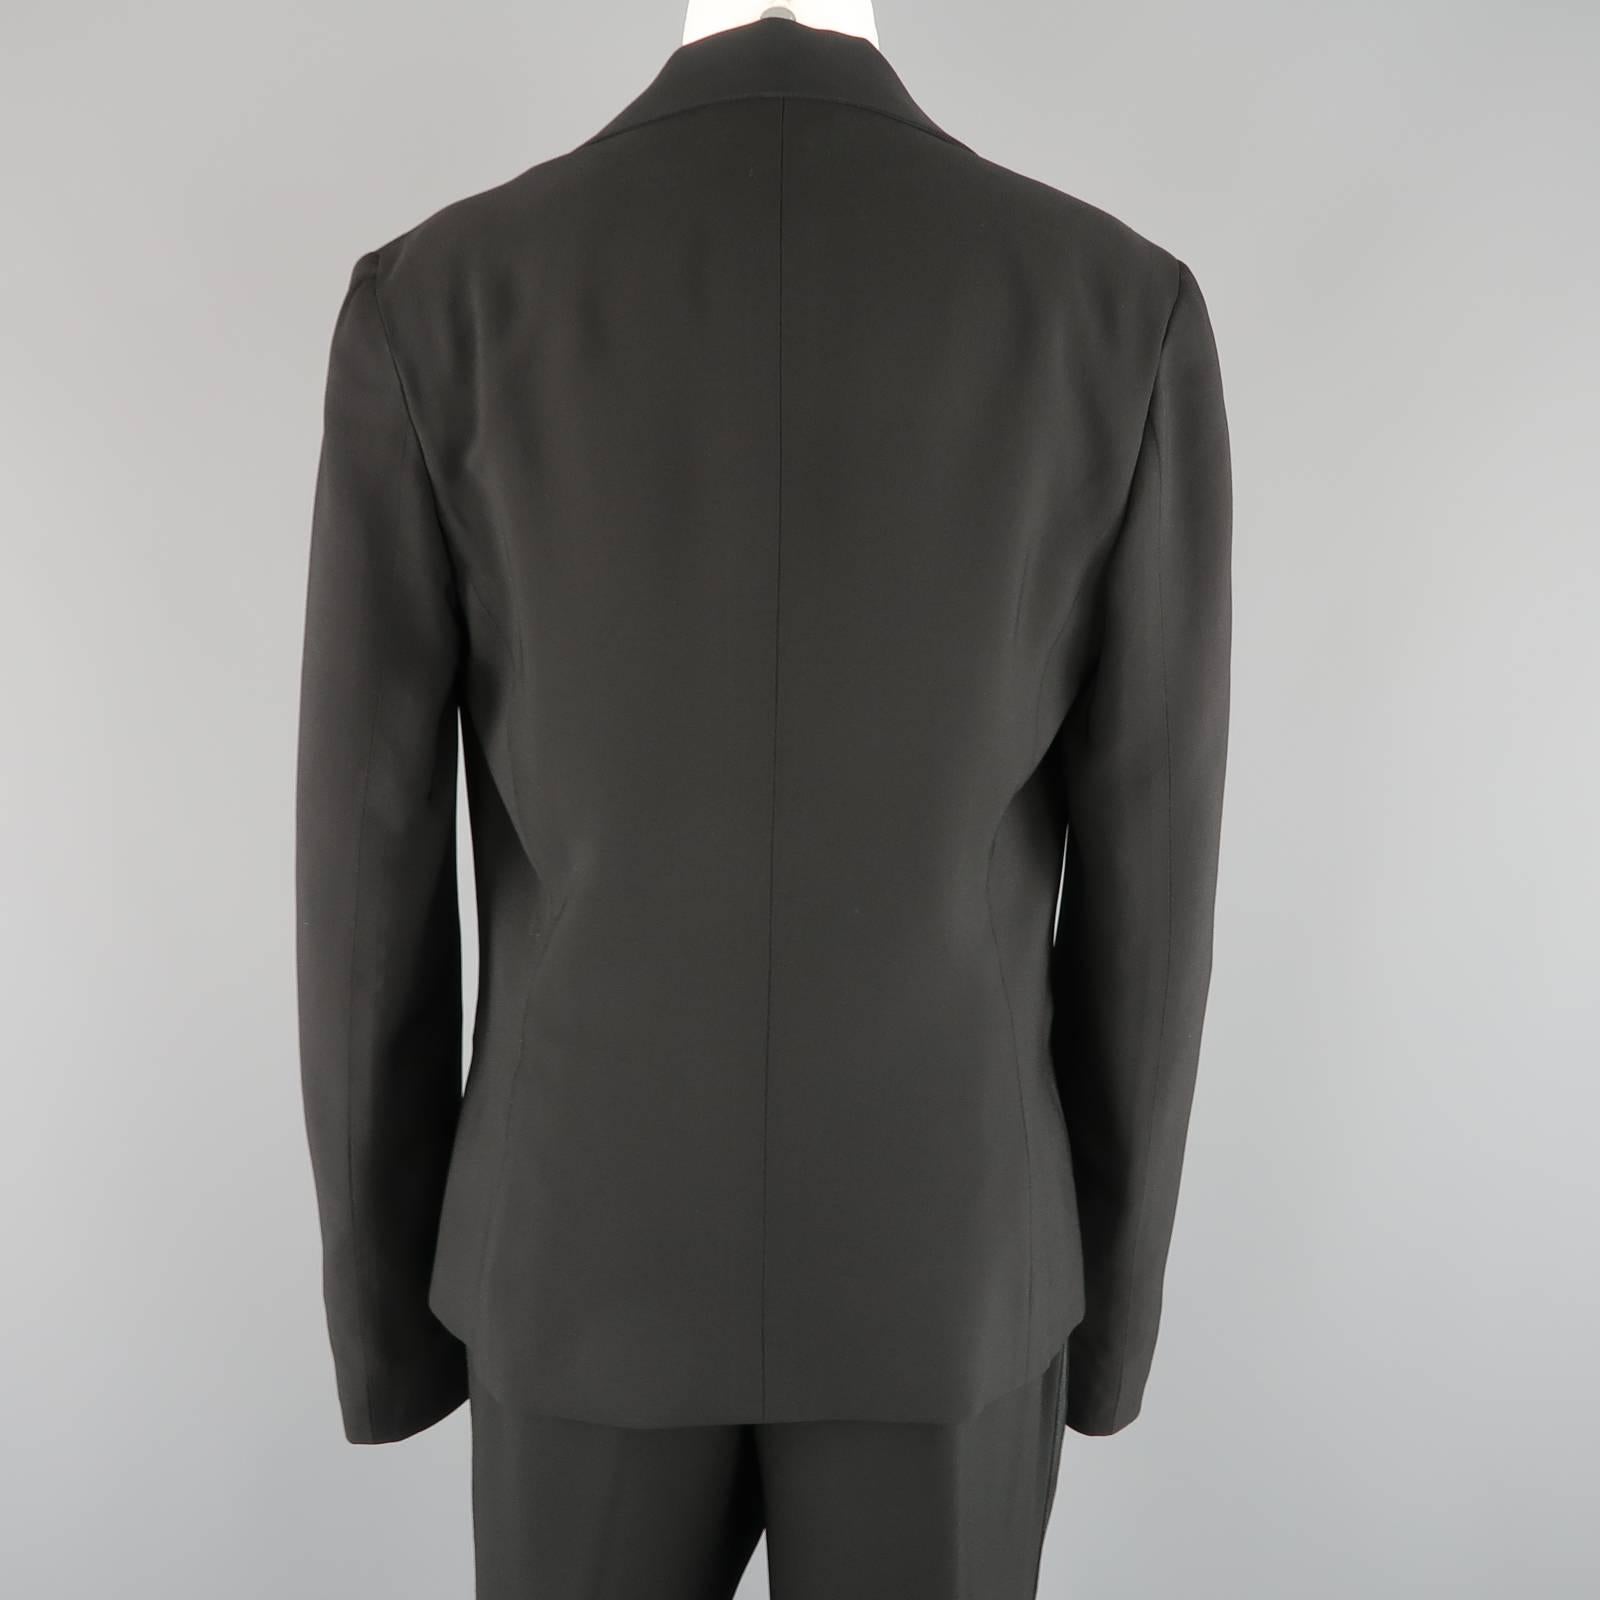 GIANFRANCO FERRE Size 10 Black & Green Peak Lapel Tuxedo Pants Suit 1